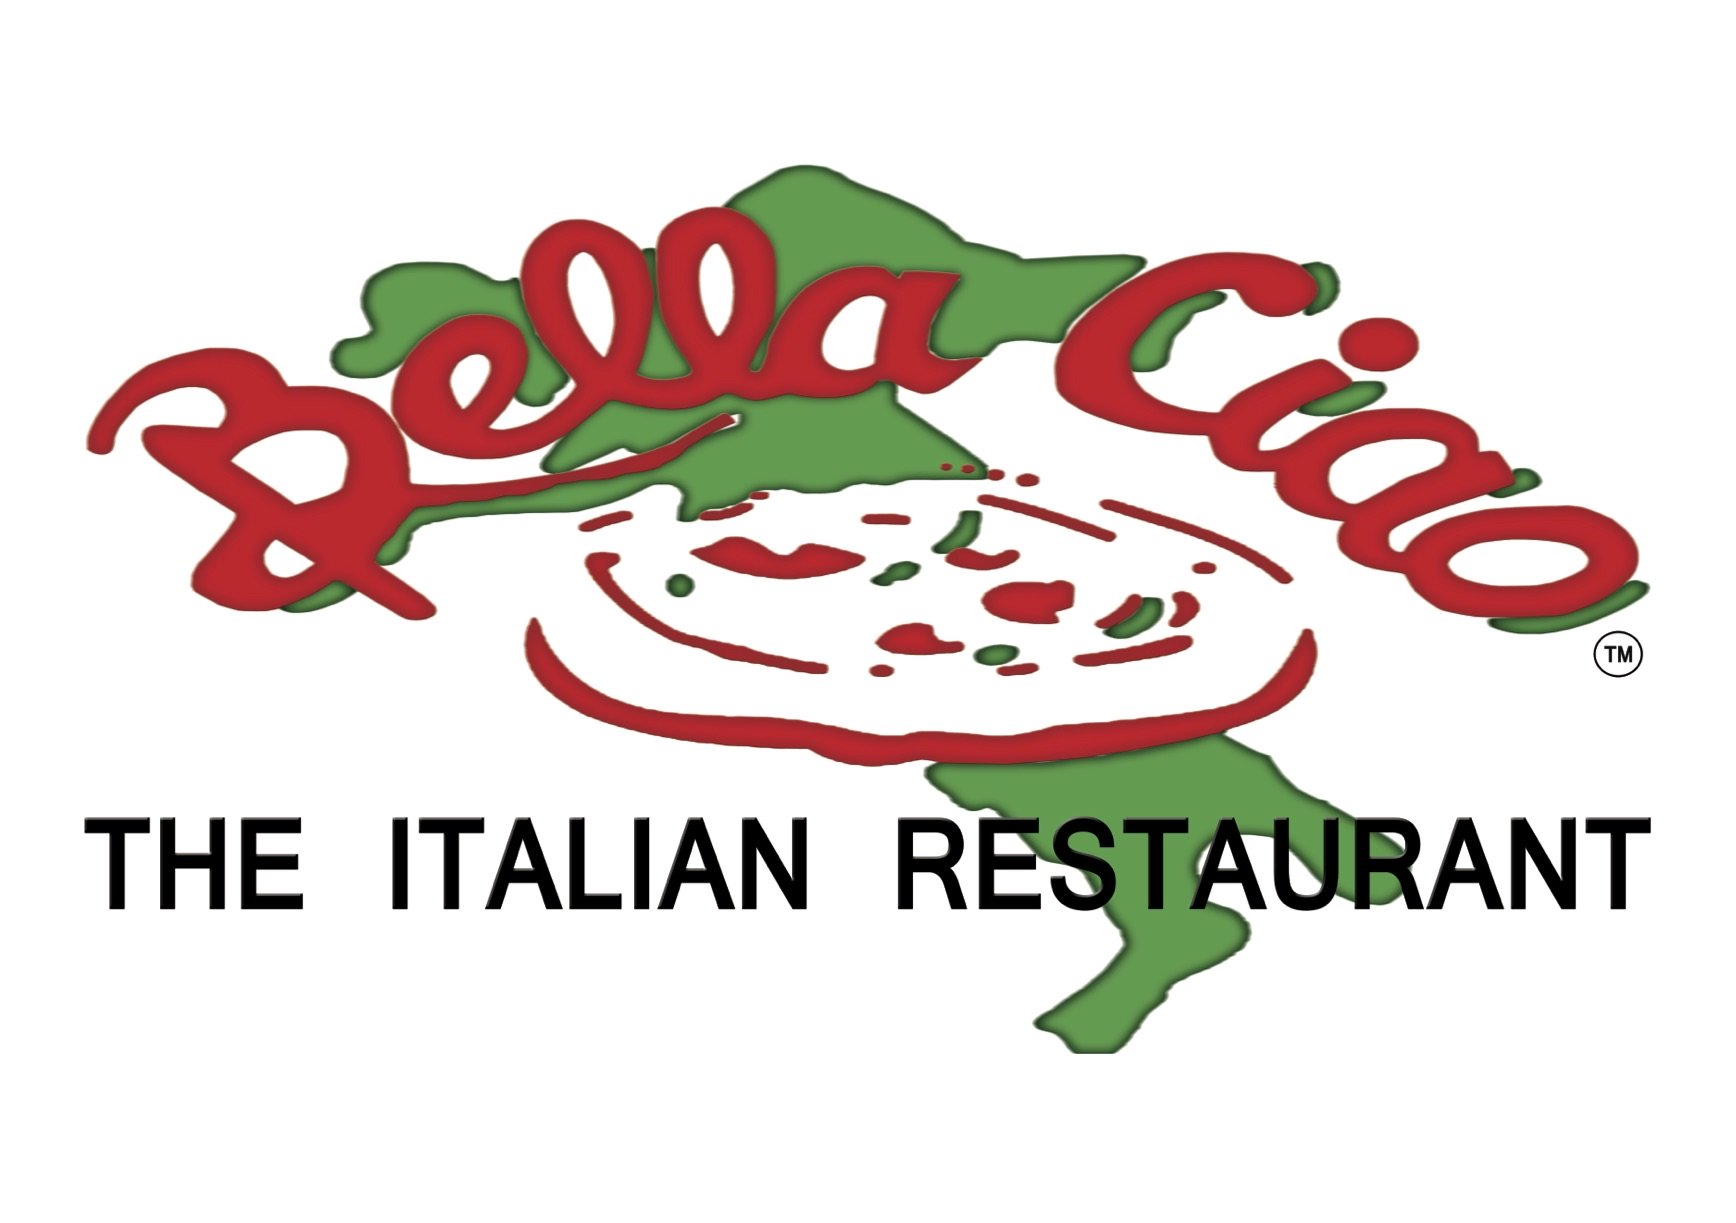 Bella Ciao Italian Restaurant logo